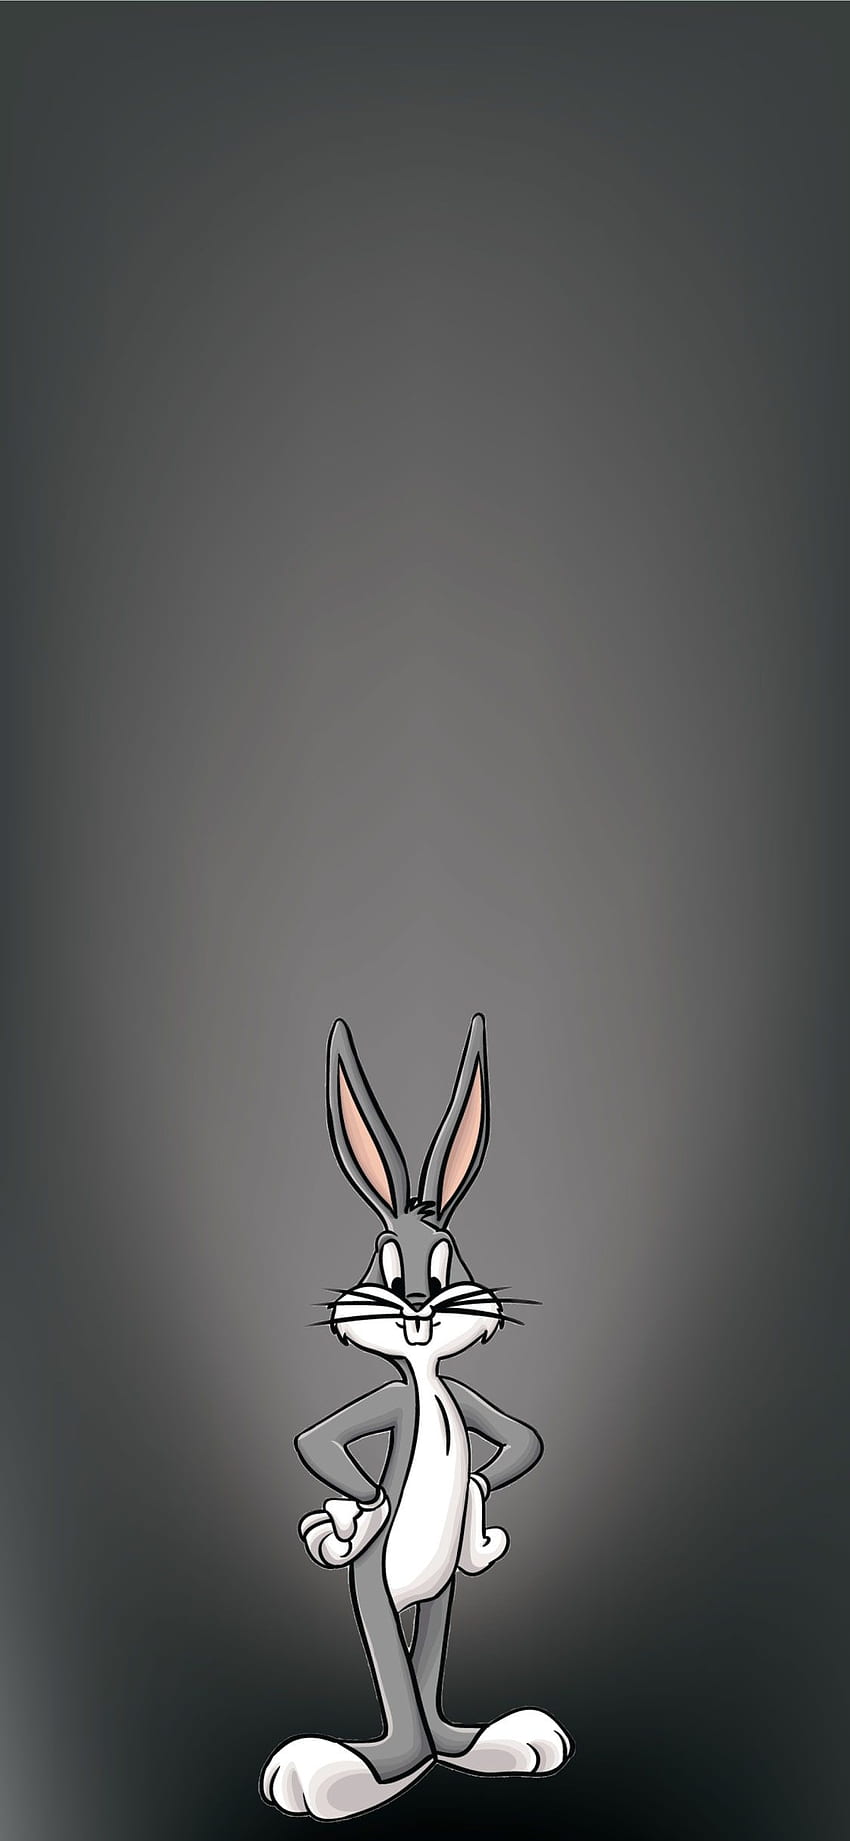  𝘣𝘶𝘨𝘴 𝘣𝘶𝘯𝘯𝘺  𝘸𝘢𝘭𝘭𝘱𝘢𝘱𝘦𝘳  𝘣𝘭𝘶𝘦   Bugs bunny  Animation Bunny